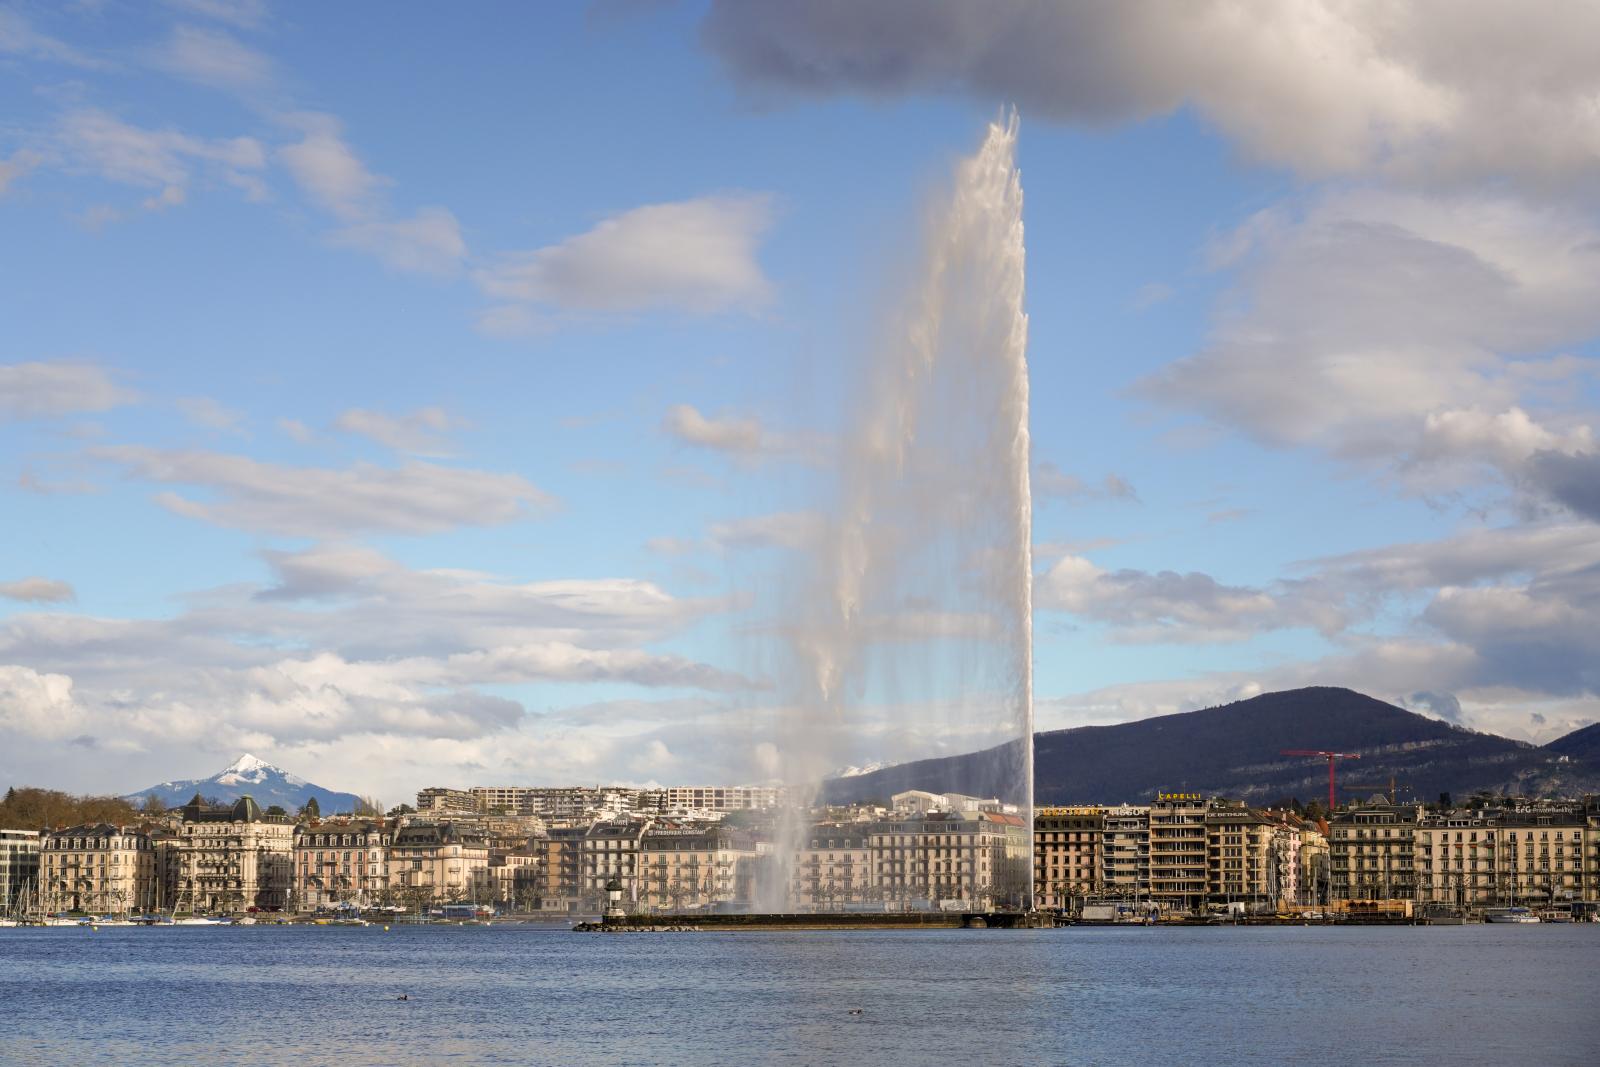 Jet d'eau | Jet of water. Landmark of the city of Geneva